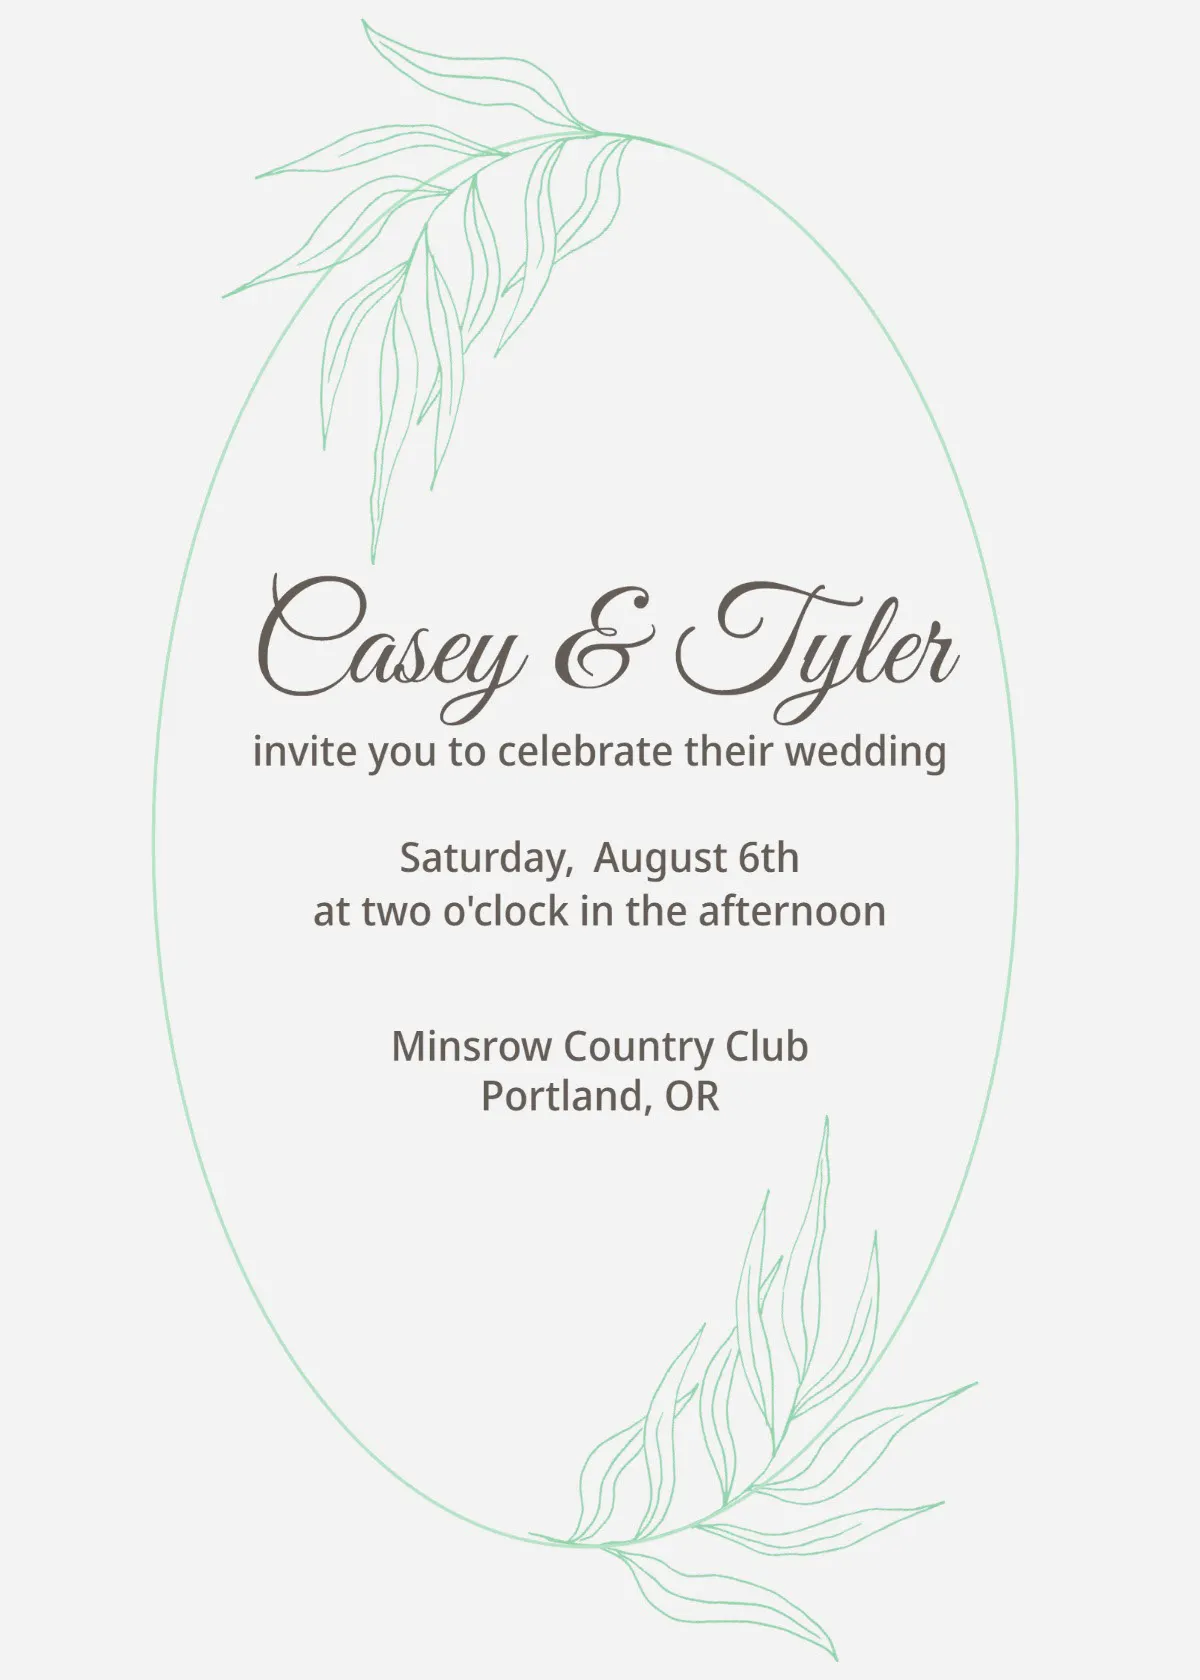 Gray & Green Oval Floral Illustration Frame Wedding Invitation